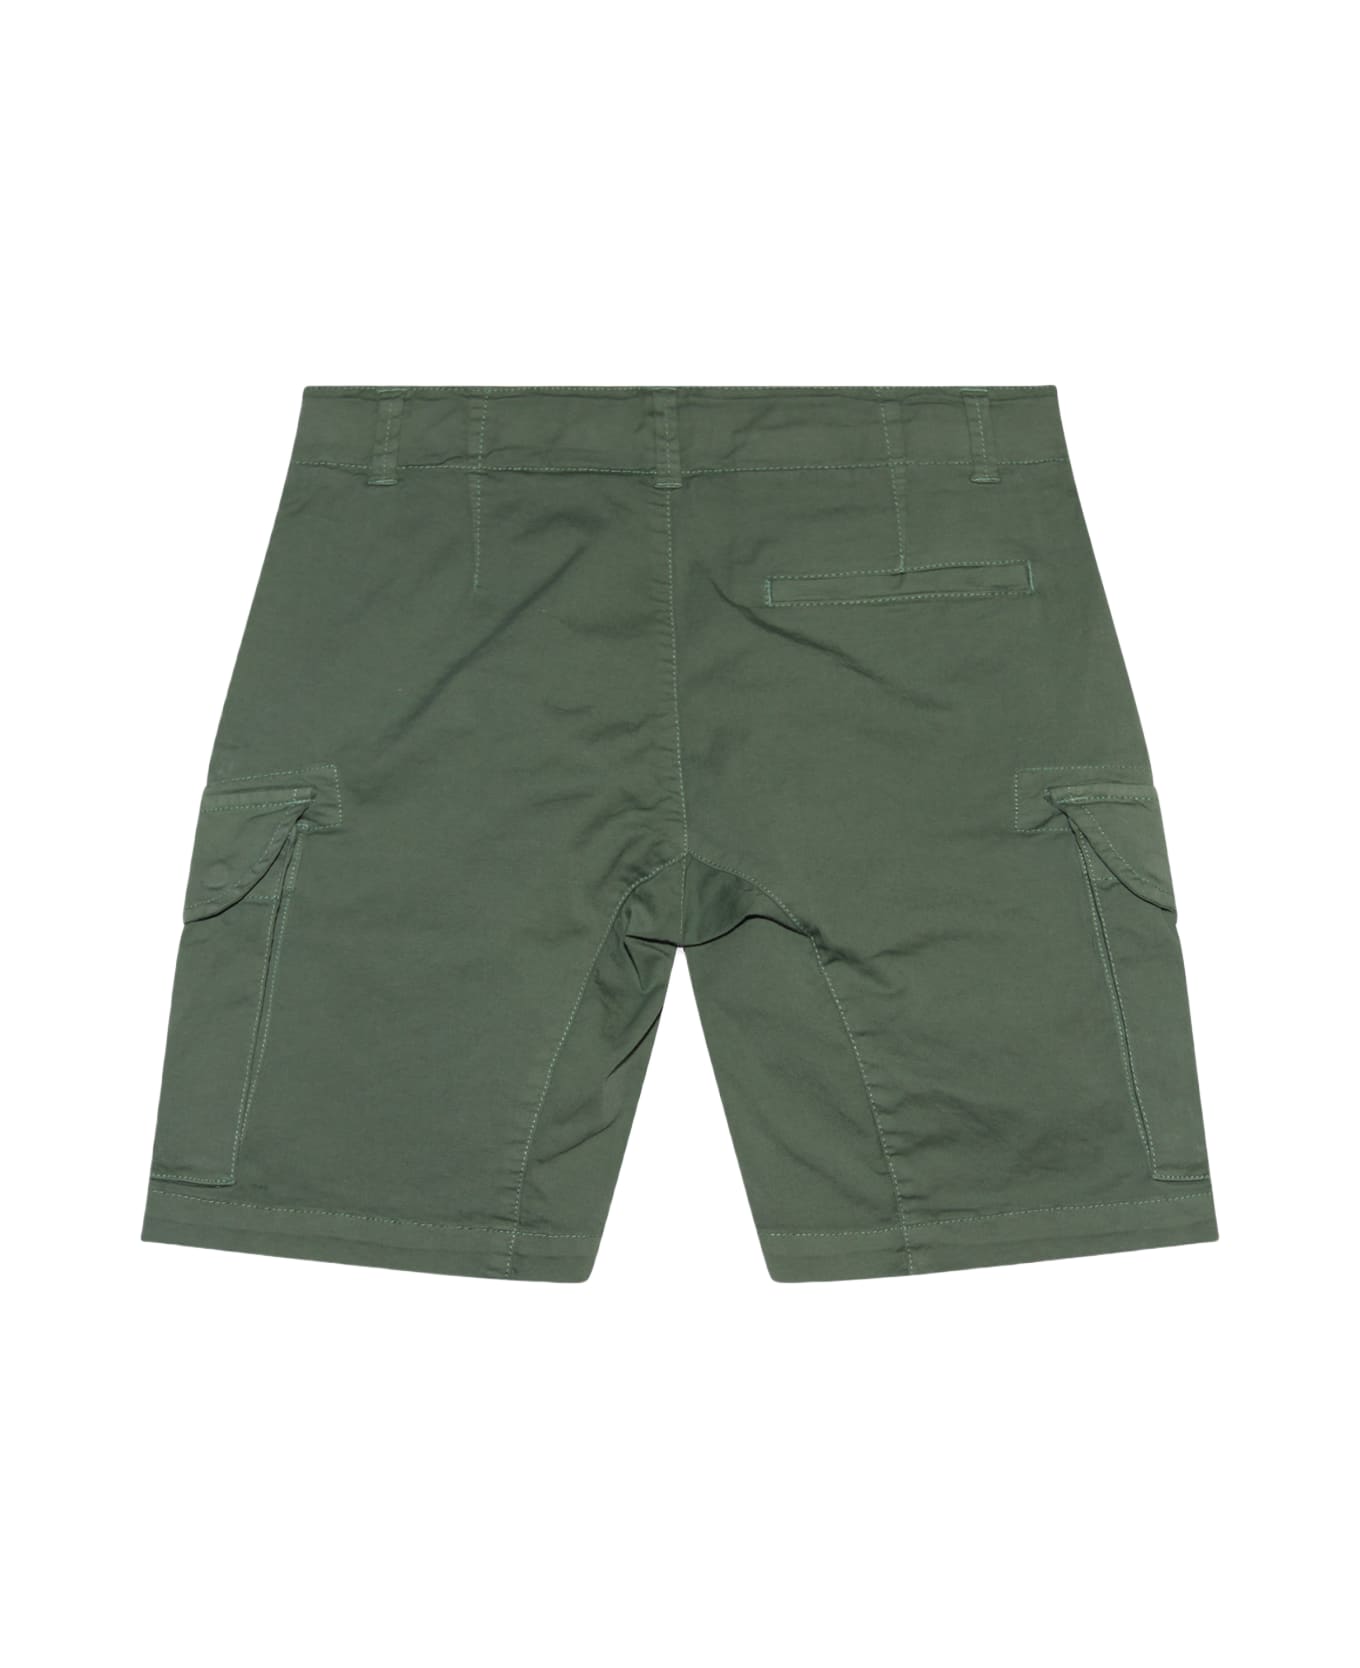 C.P. Company Green Cotton Shorts - Green